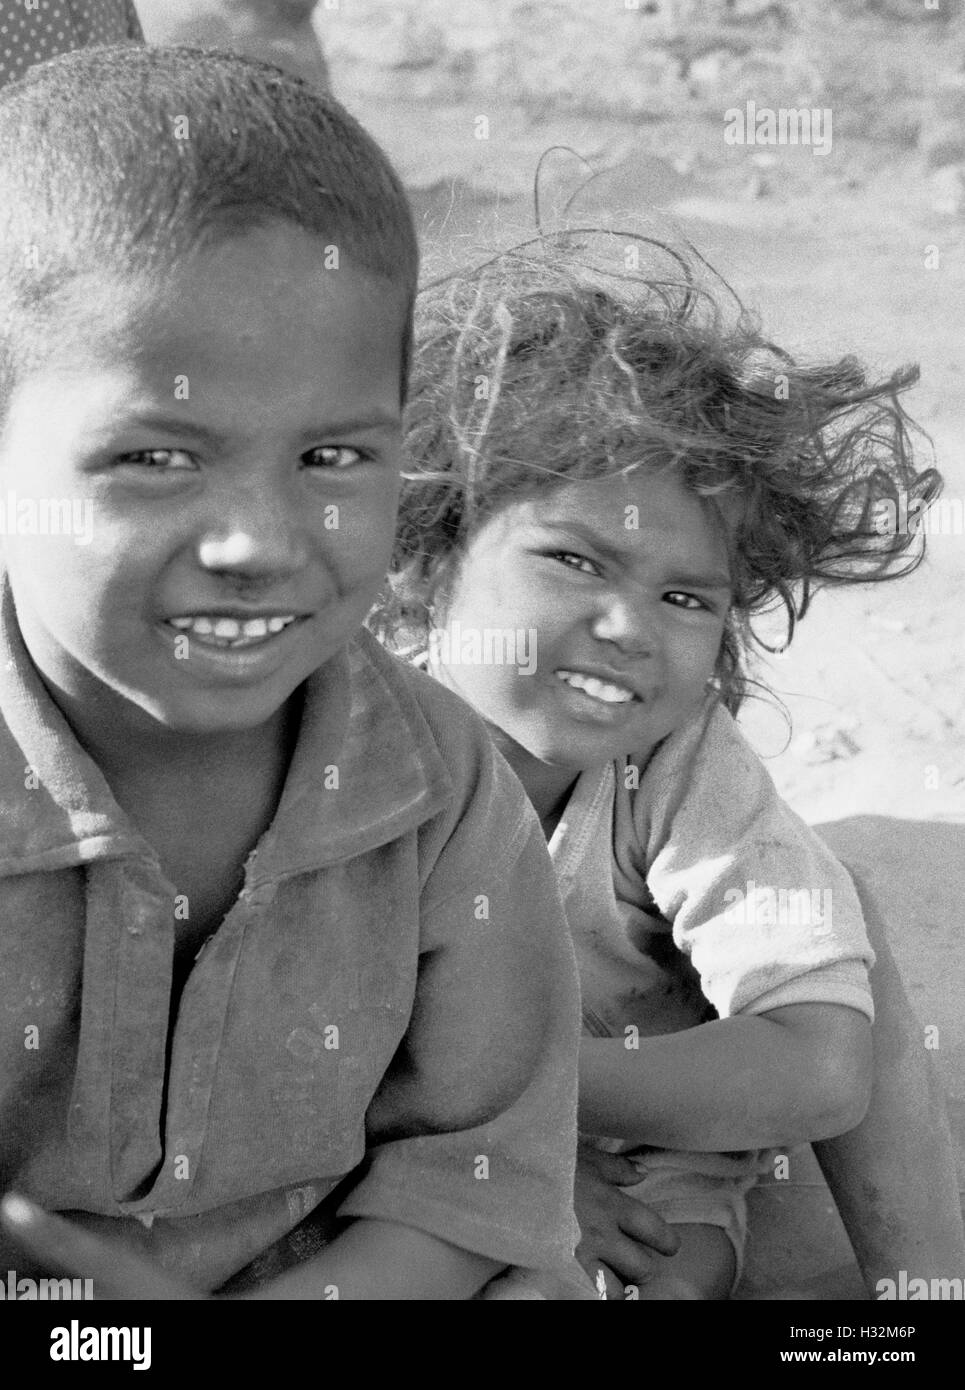 children in india brian mcguire Stock Photo